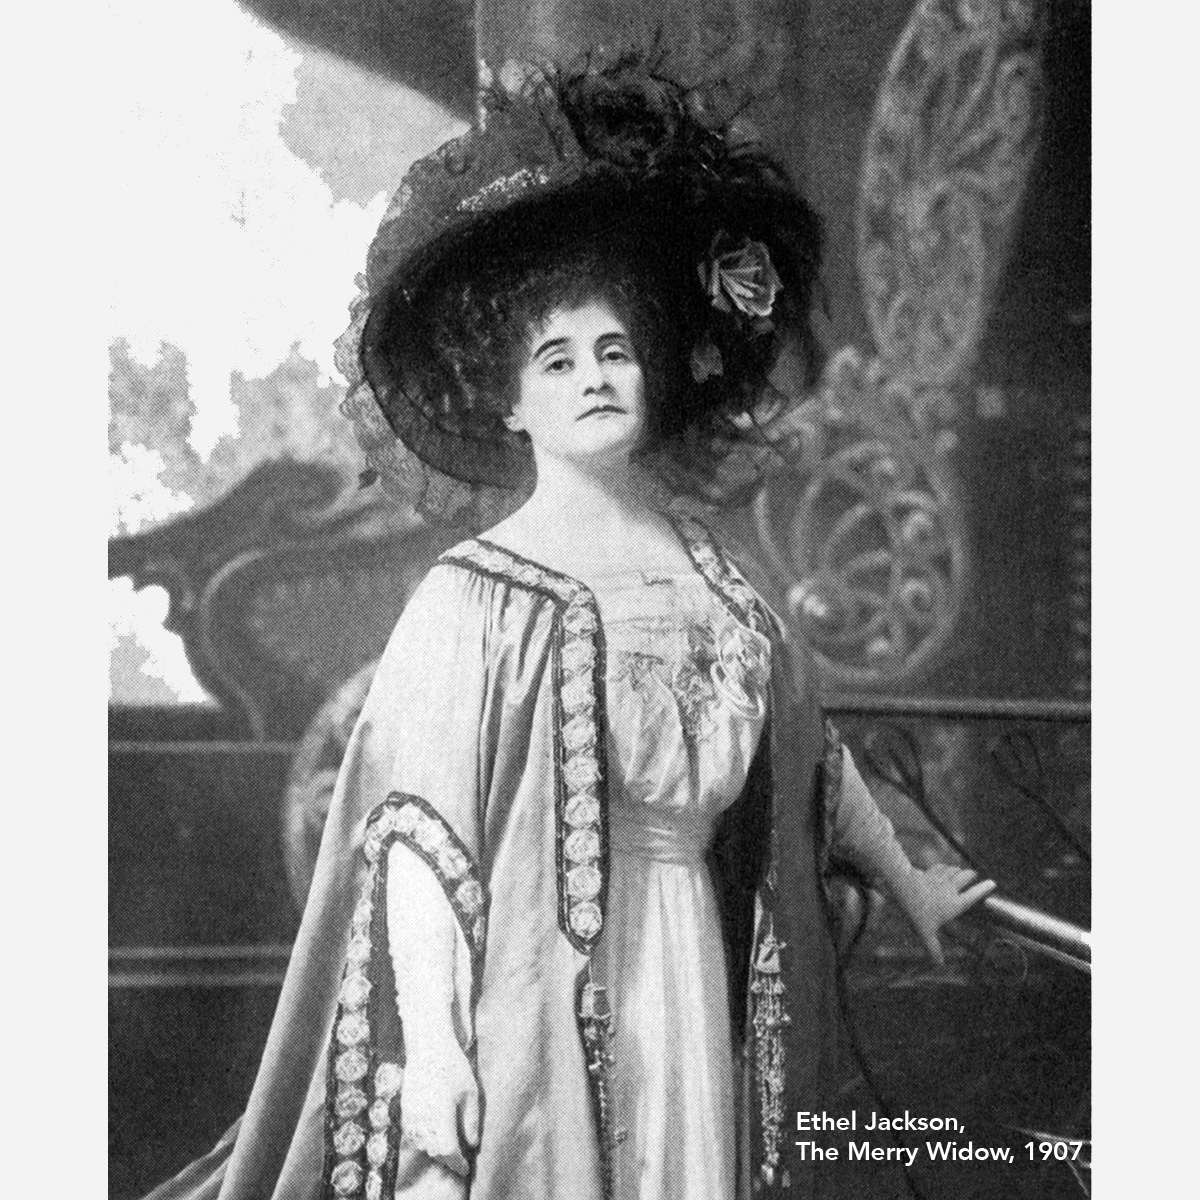 Ethel Jackson, The Merry Widow, 1907